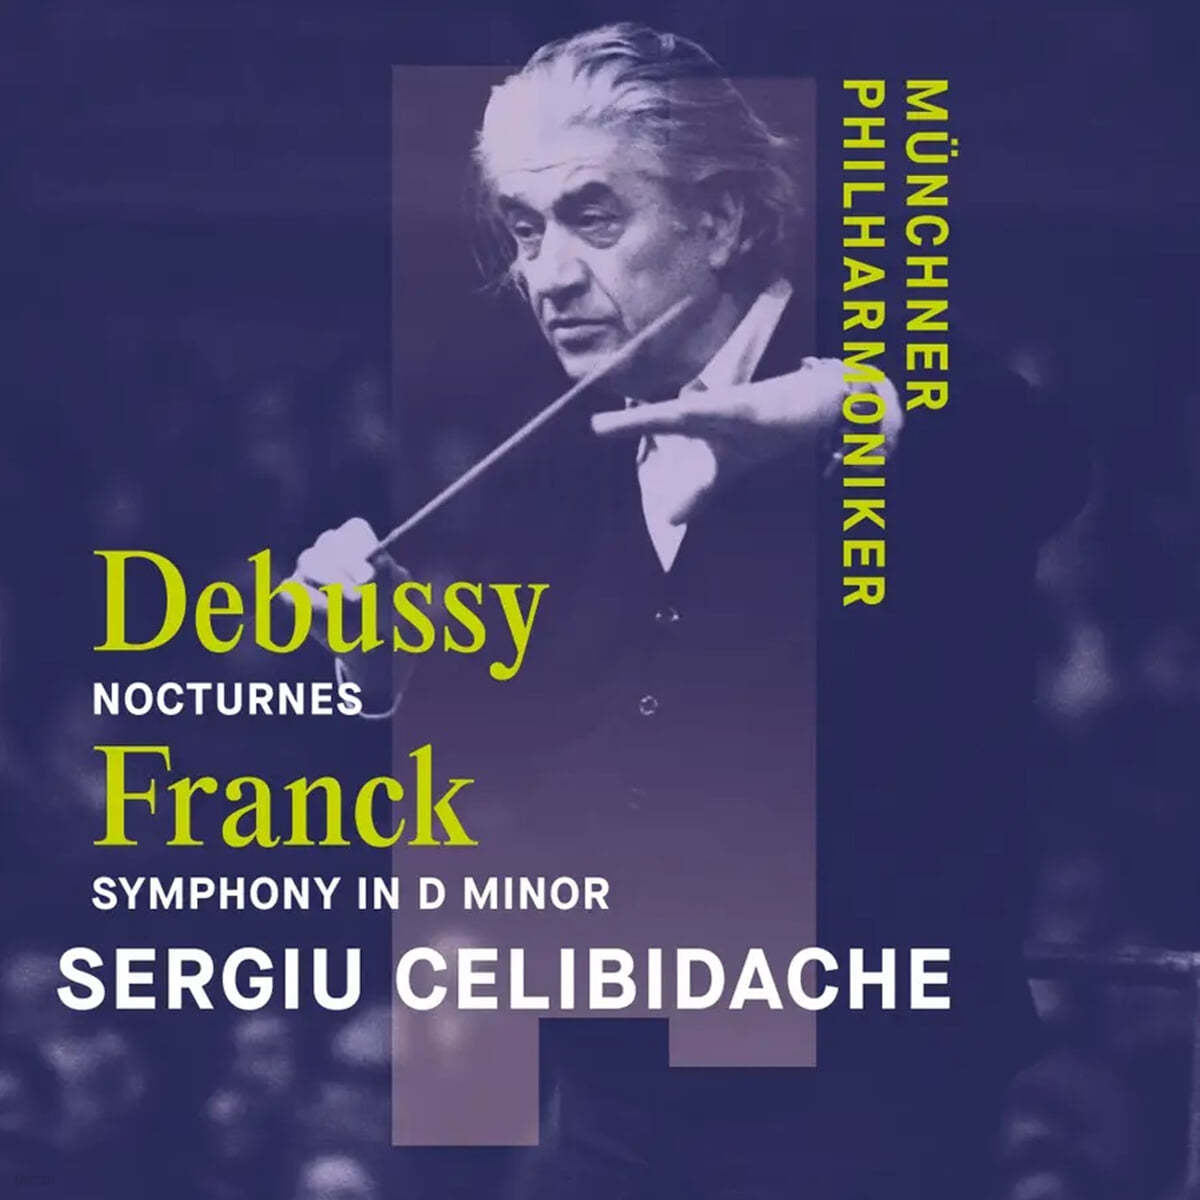 Sergiu Celibidache 프랑크: 교향곡 D단조/ 드뷔시: 녹턴 (Debussy: Nocturnes / Franck: Symphony in D Minor)